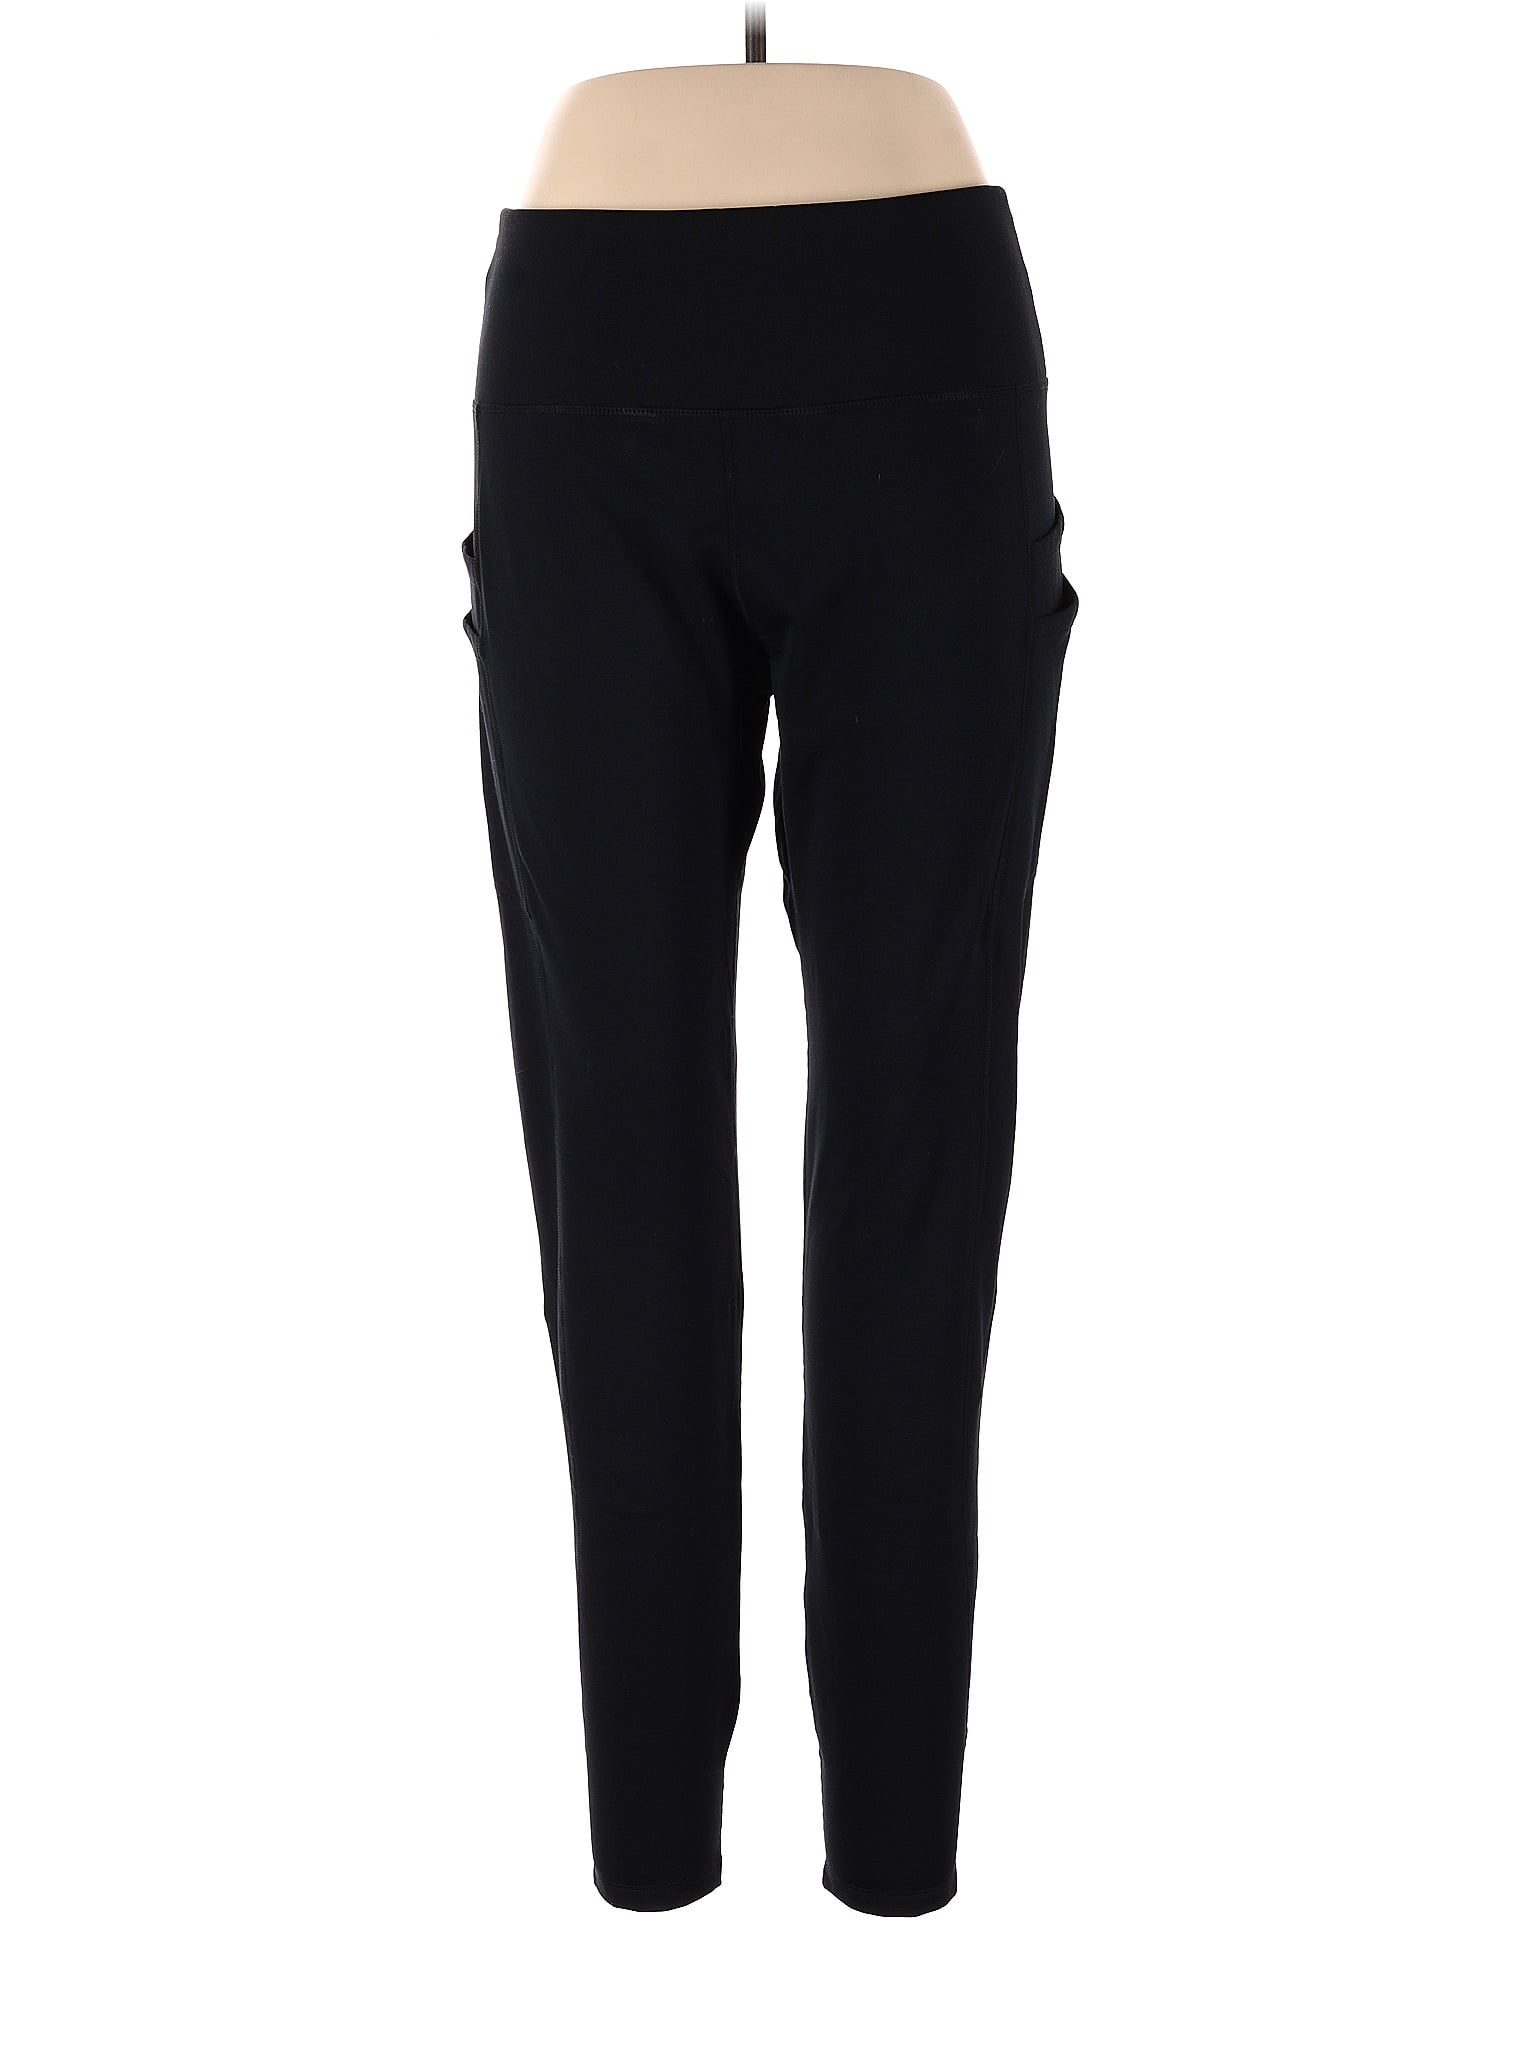 Baleaf Sports Black Active Pants Size XL - 36% off